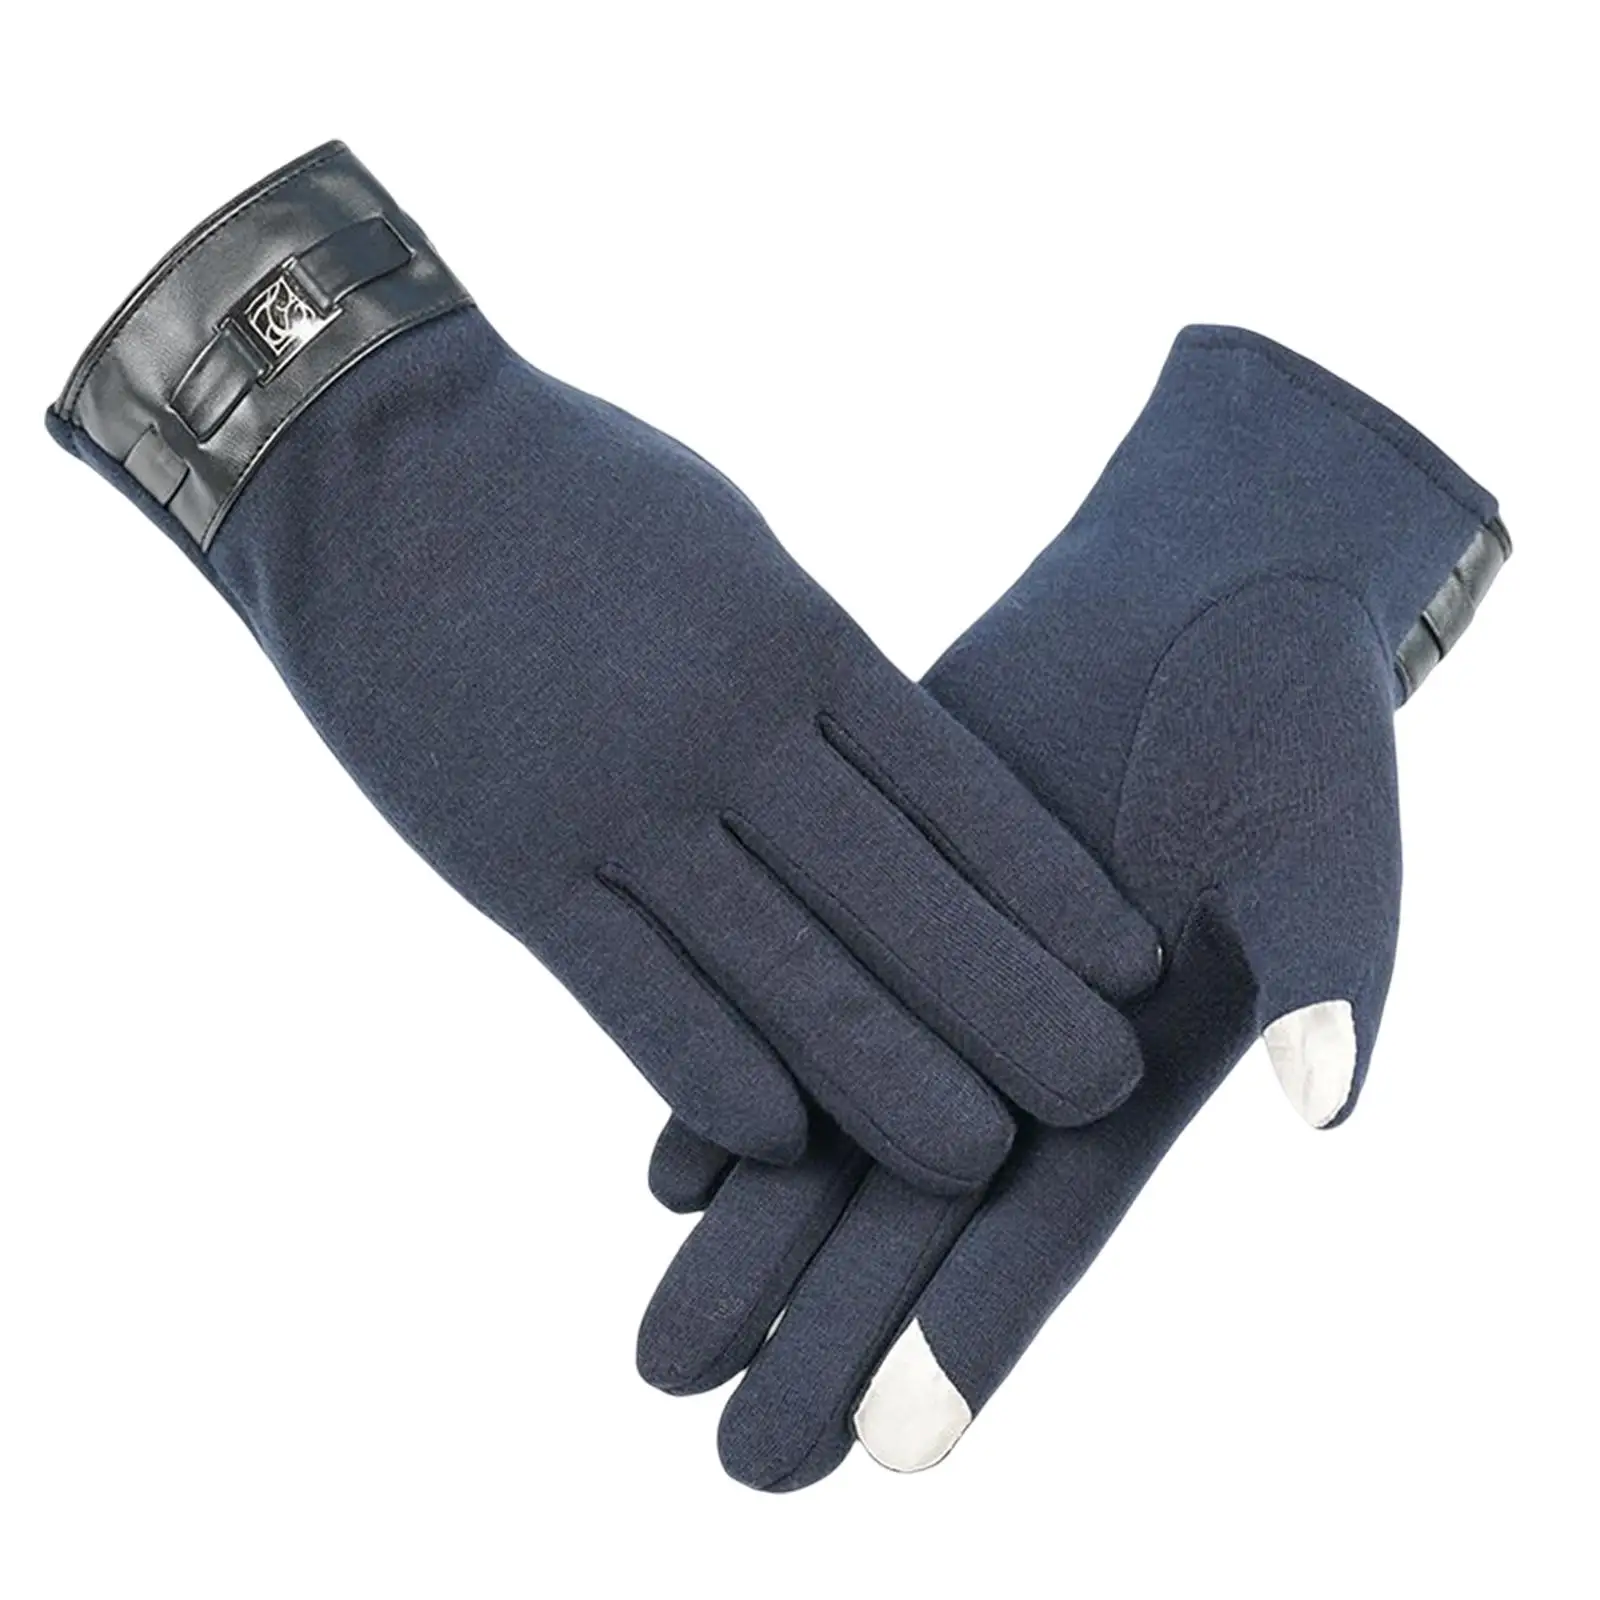 Lightweight Winter Gloves Comfortable Work Gloves Warm Gloves Non Slip Gloves for Hiking Camping Riding Driving Biking